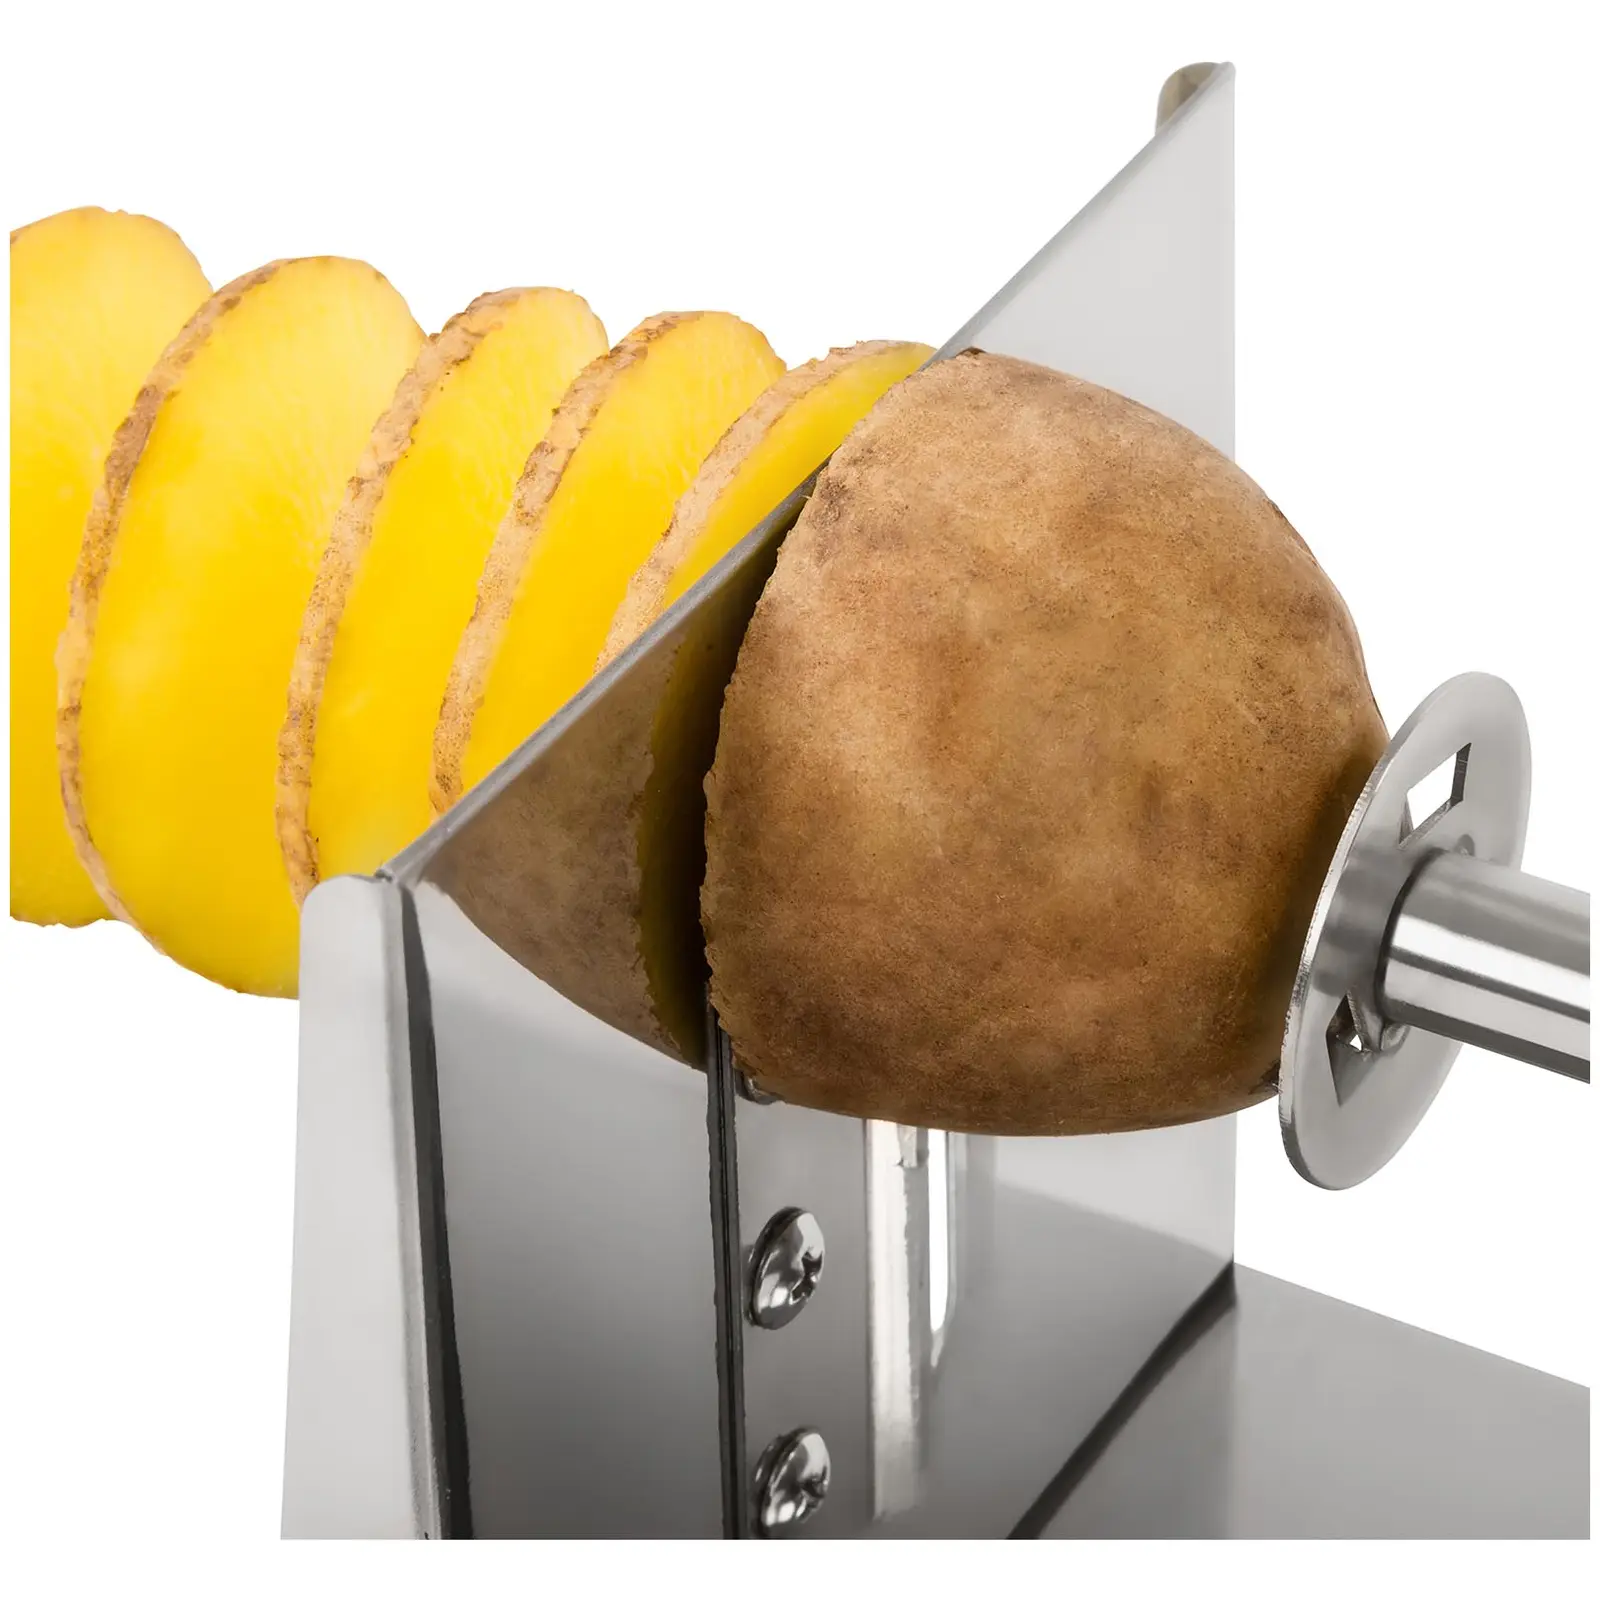 Coupe pomme de terre en spirale - manuel - Acier inoxydable